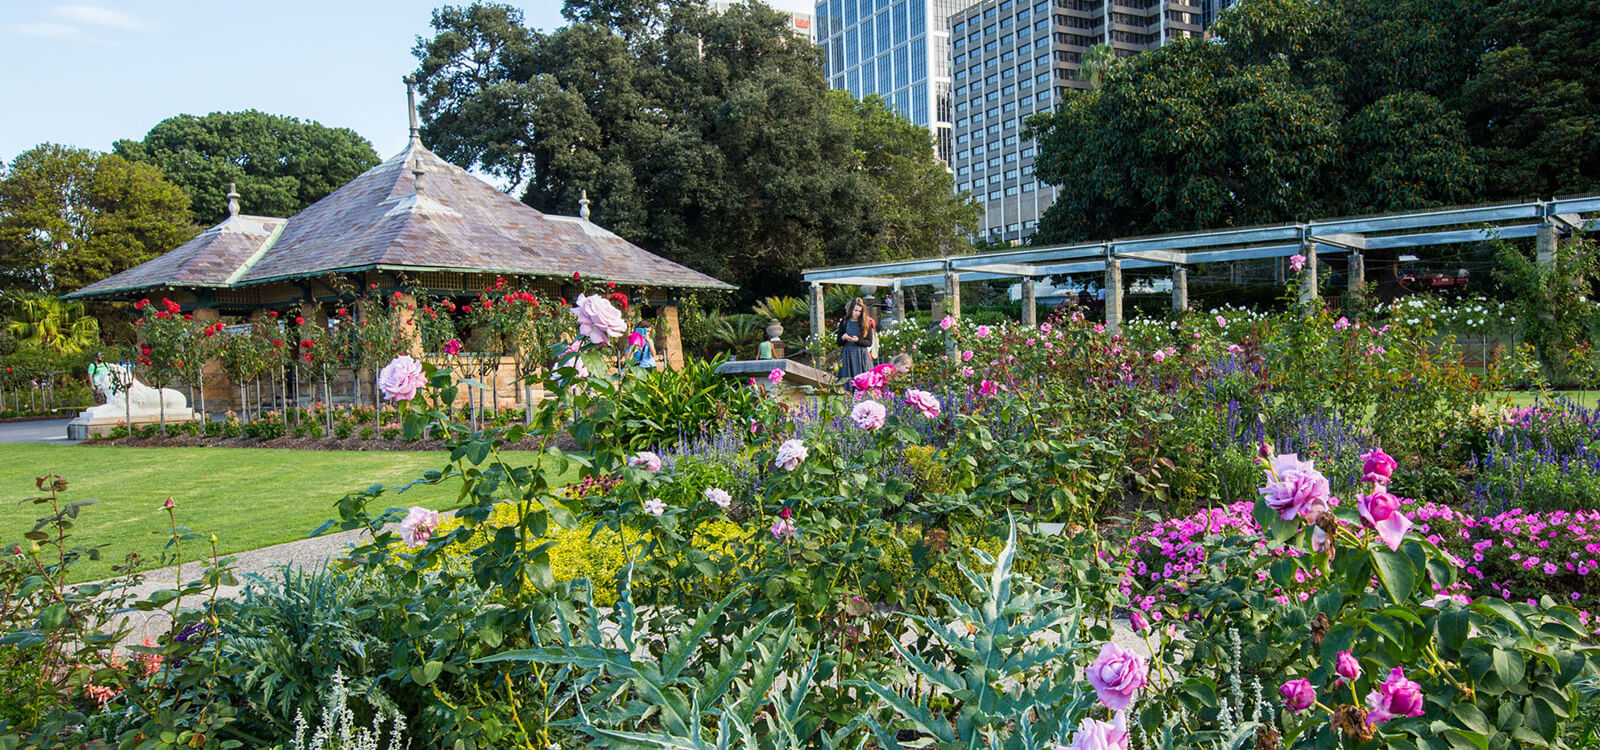 https://classbento.com.au/images/venue/rose-garden-and-pavilion-at-royal-botanic-gardens-sydney-1-1600.jpg